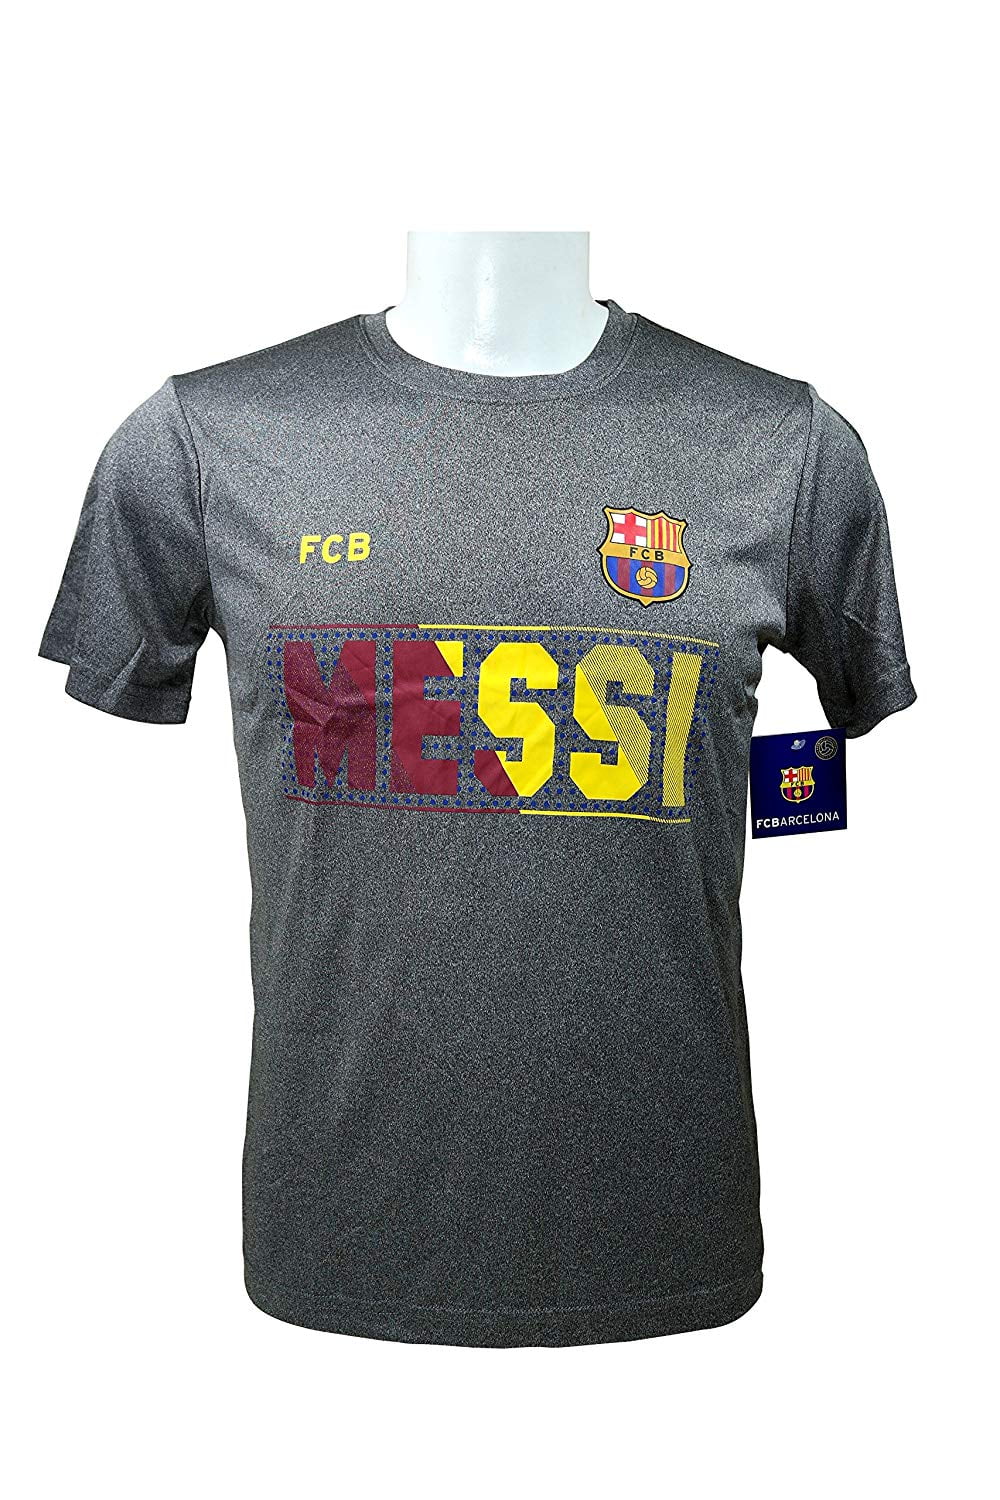 Barcelona Jersey 007 T-Shirt Details about   HKY FC Barcelona Official Jersey 